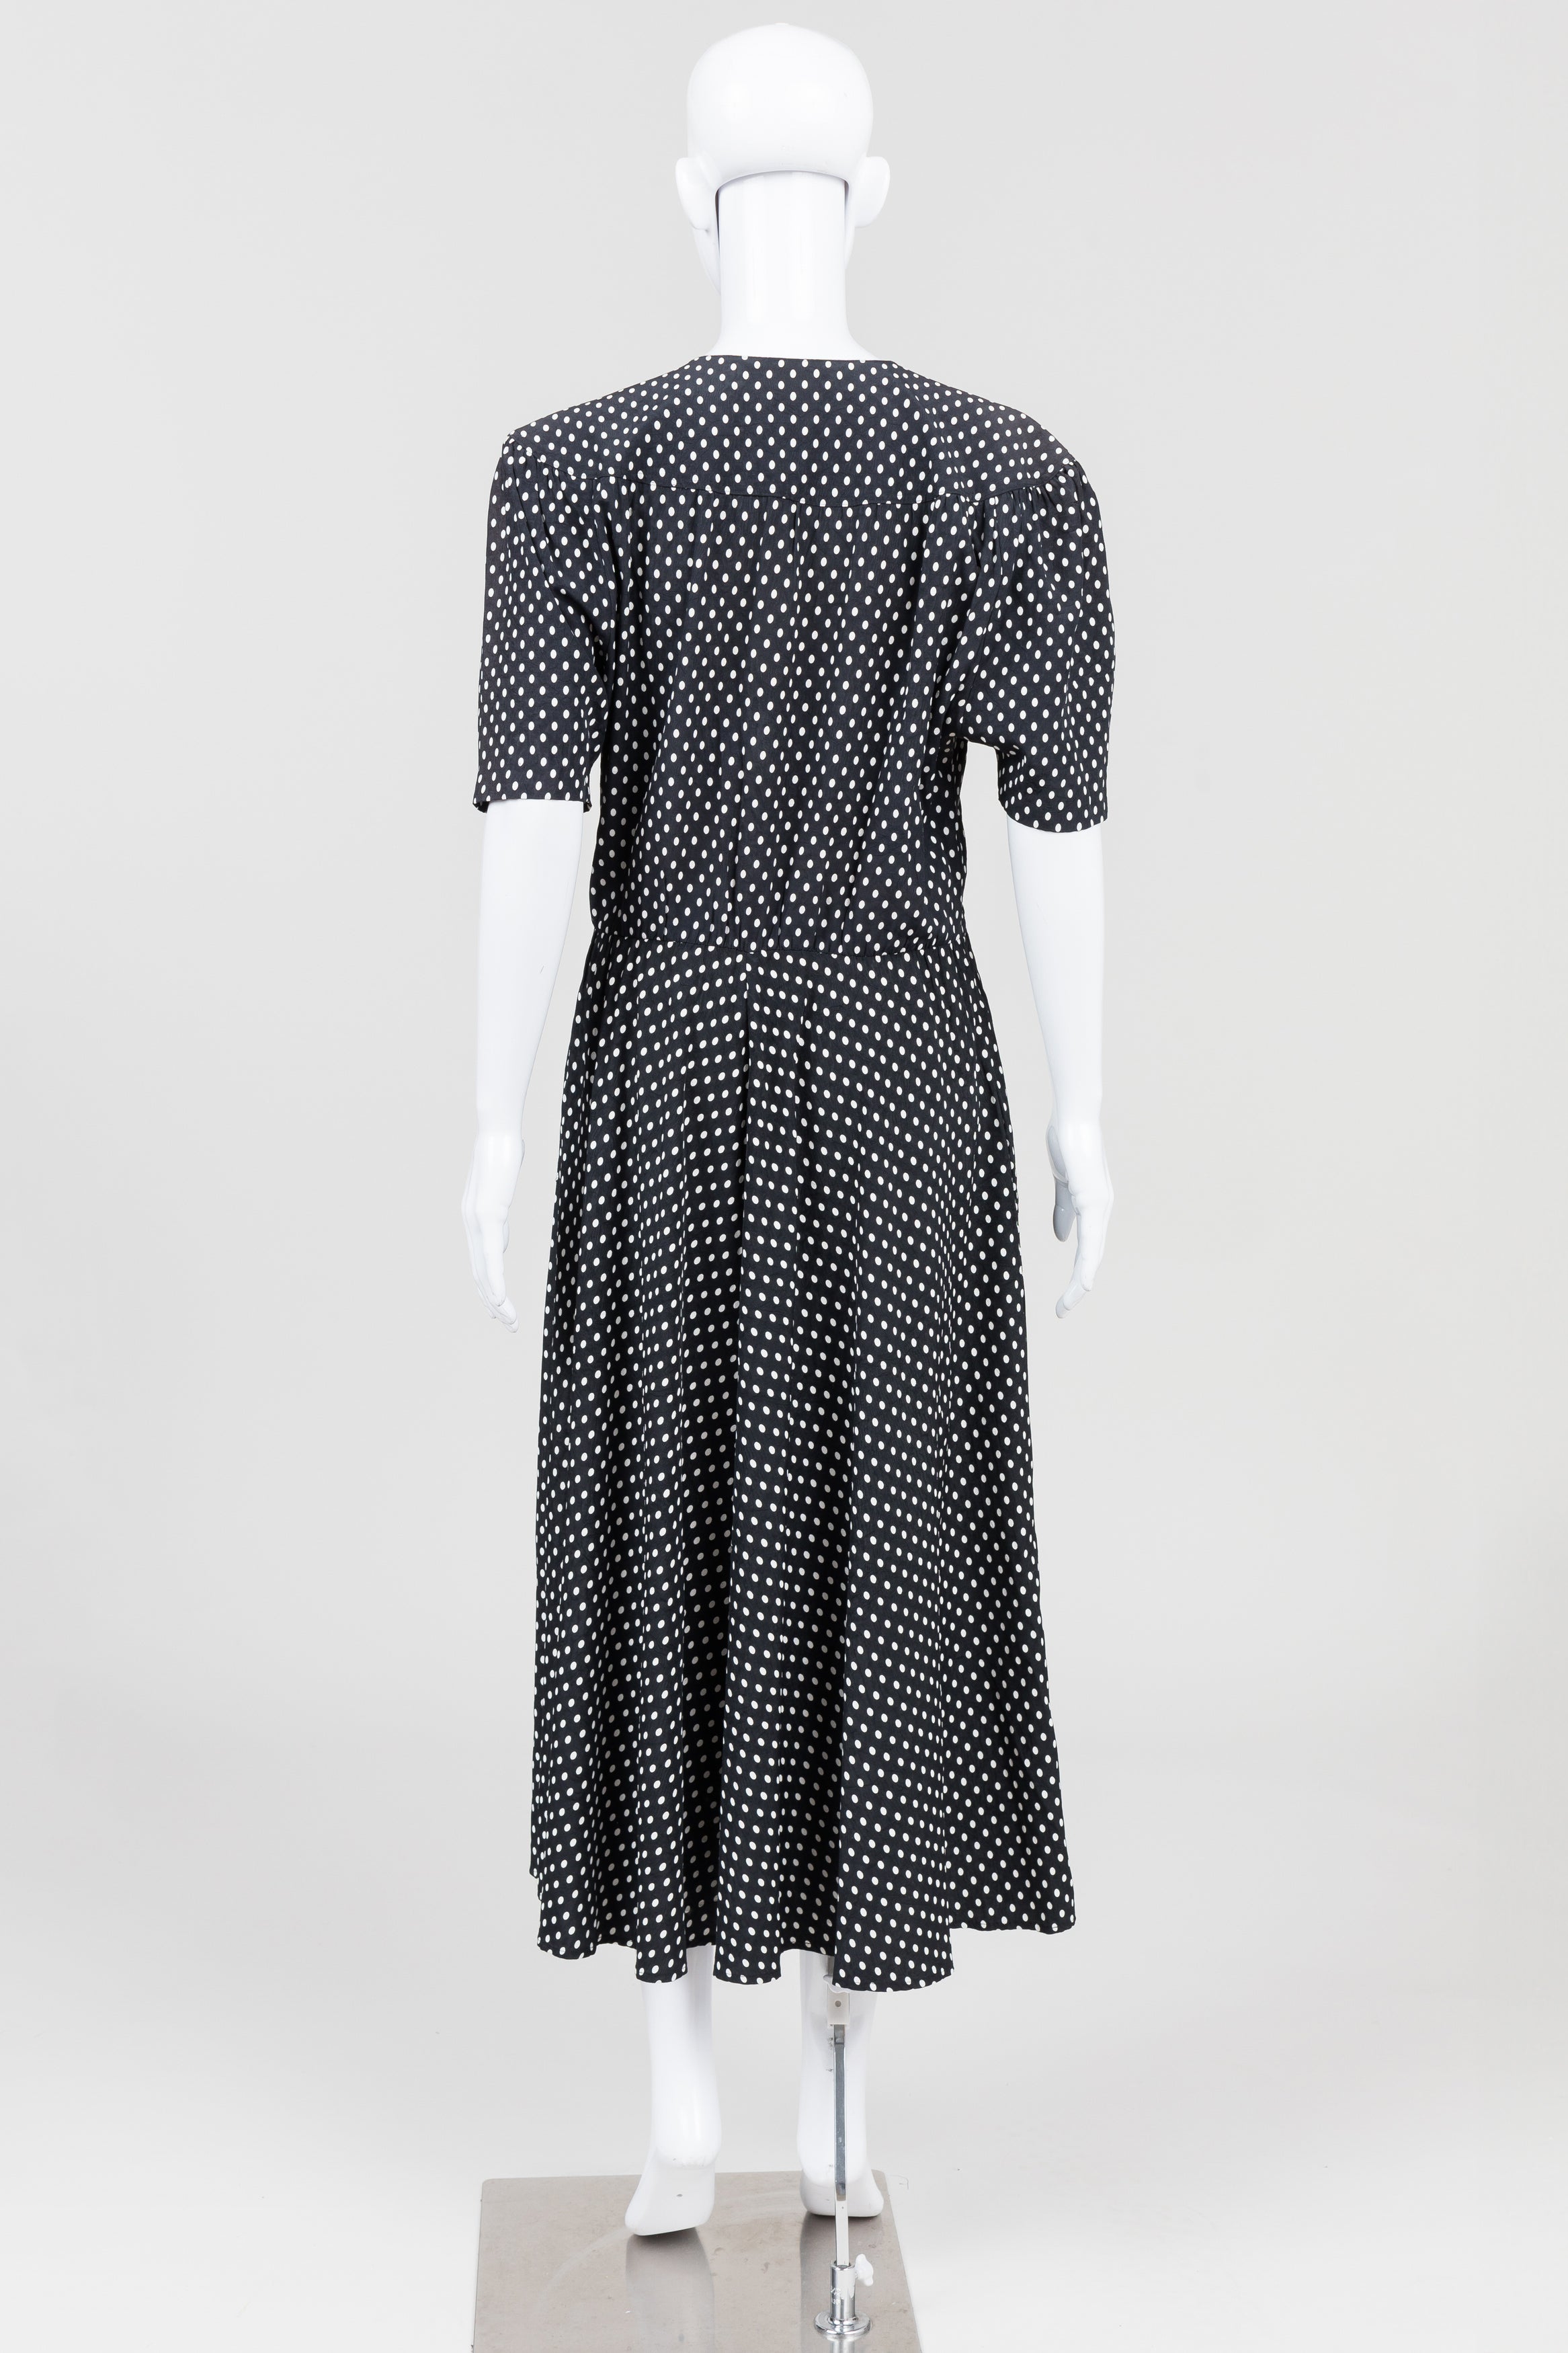 SL Fashions Navy Dot Vintage Fit & Flare Dress (12)